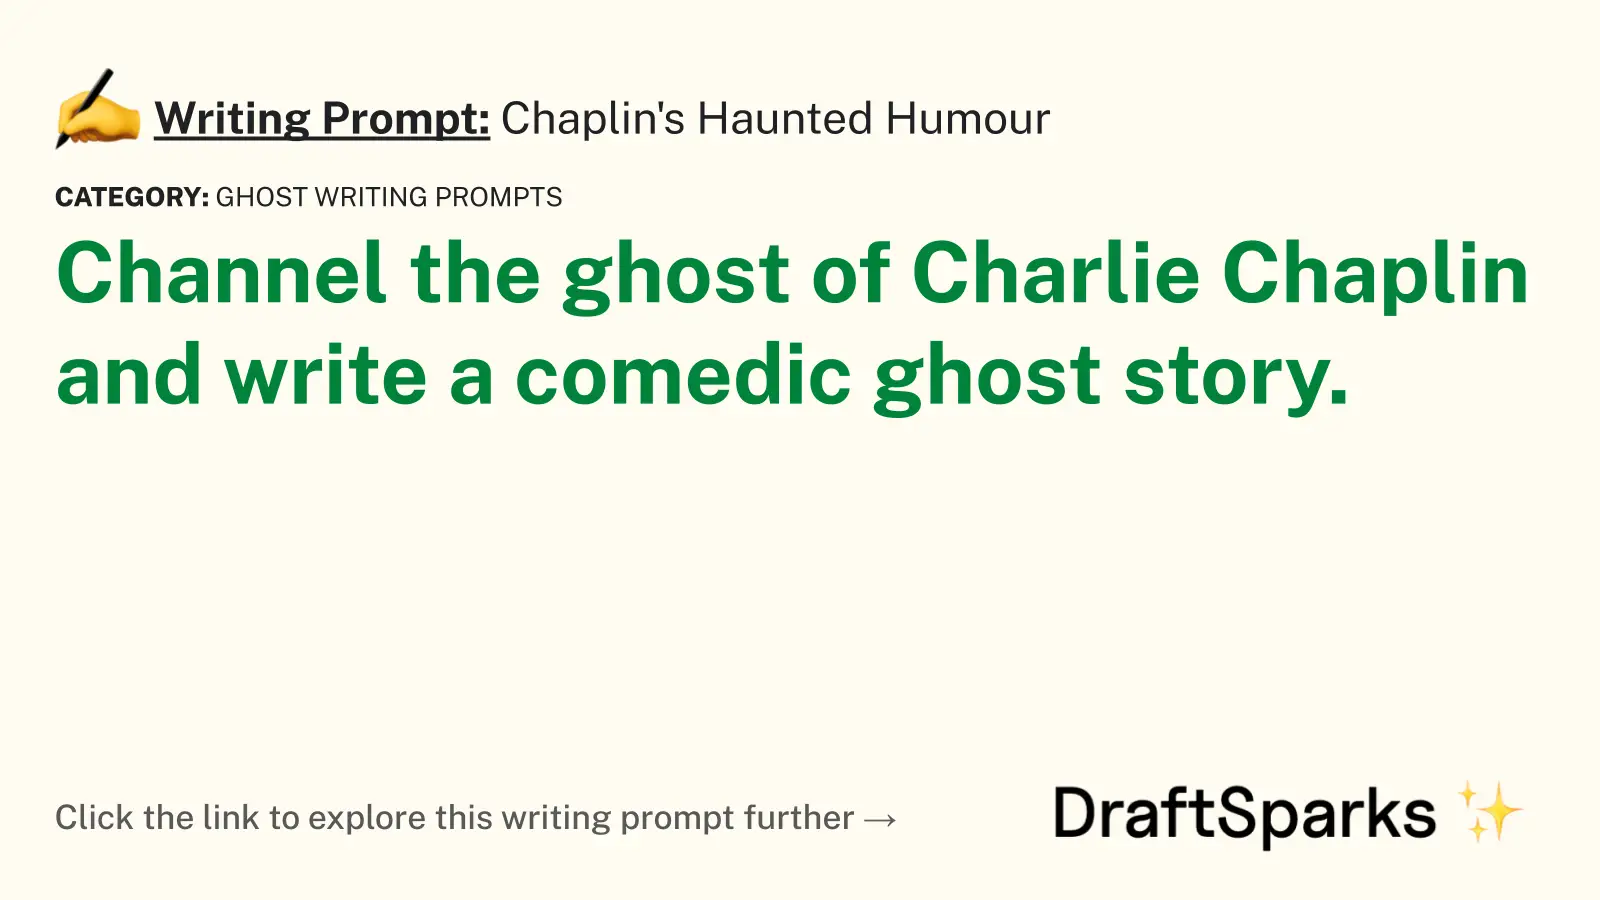 Chaplin’s Haunted Humour